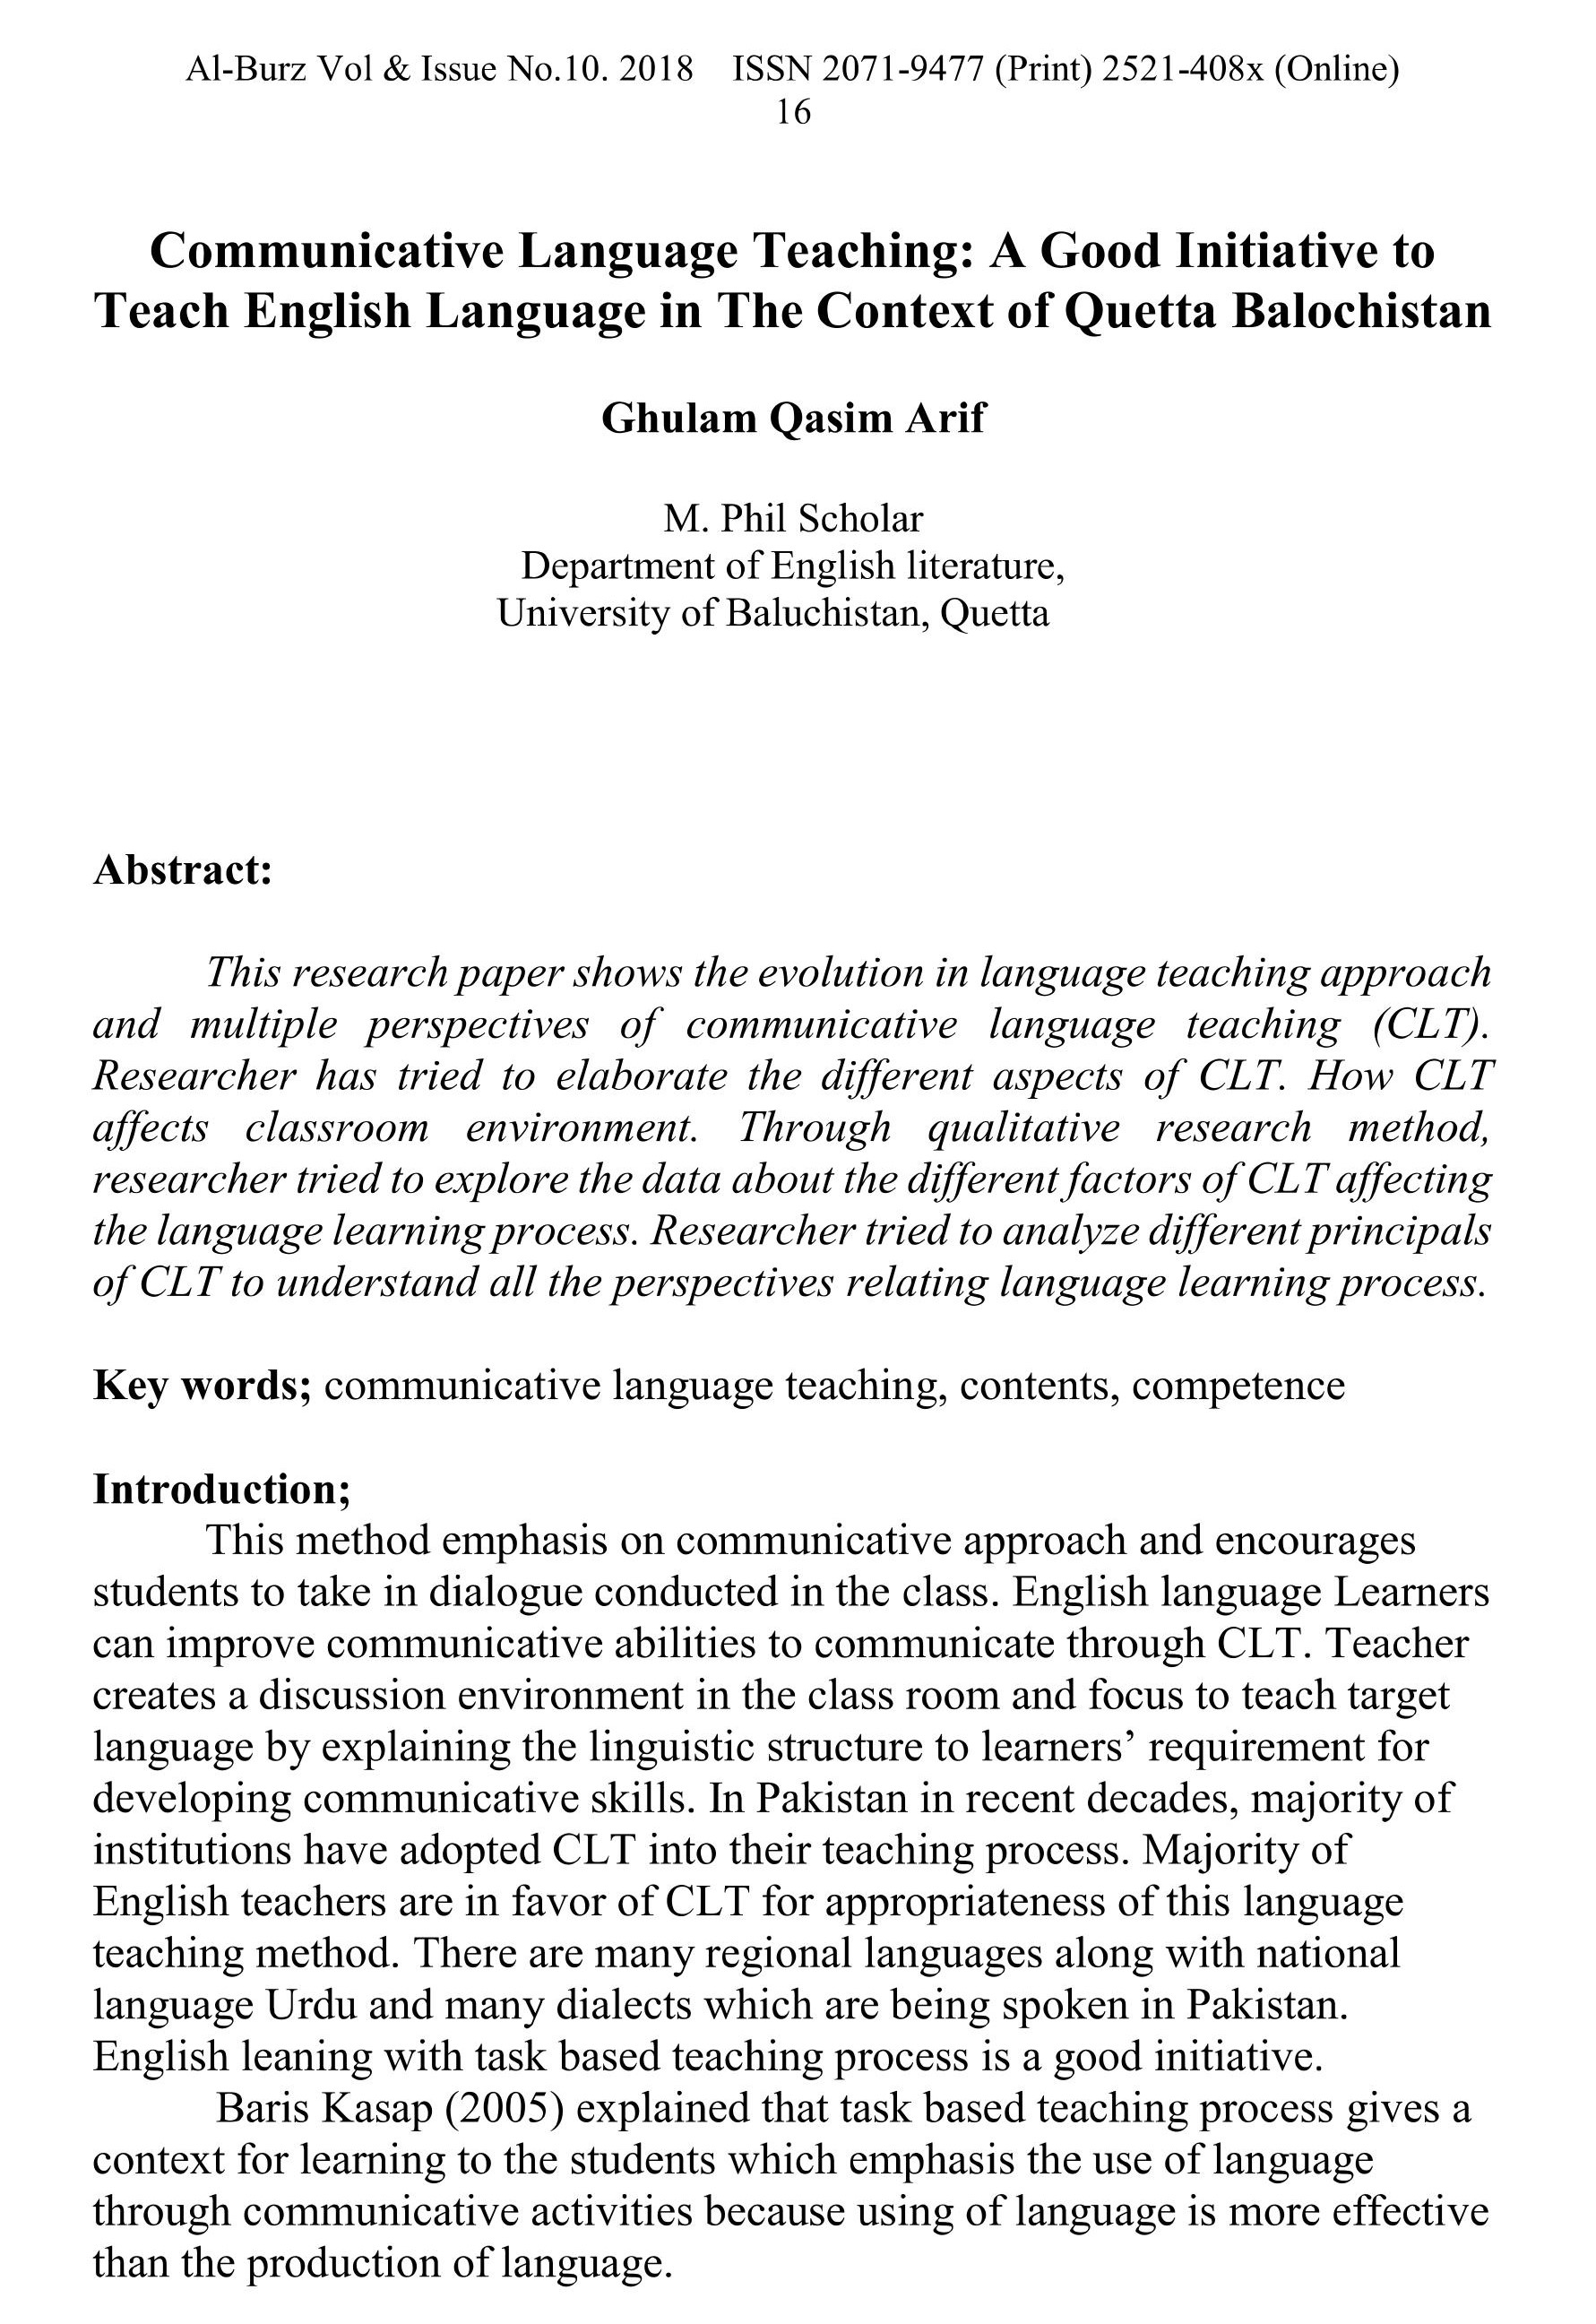 Communicative Language Teaching: A Good Initiative to Teach English Language in The Context of Quetta Balochistan